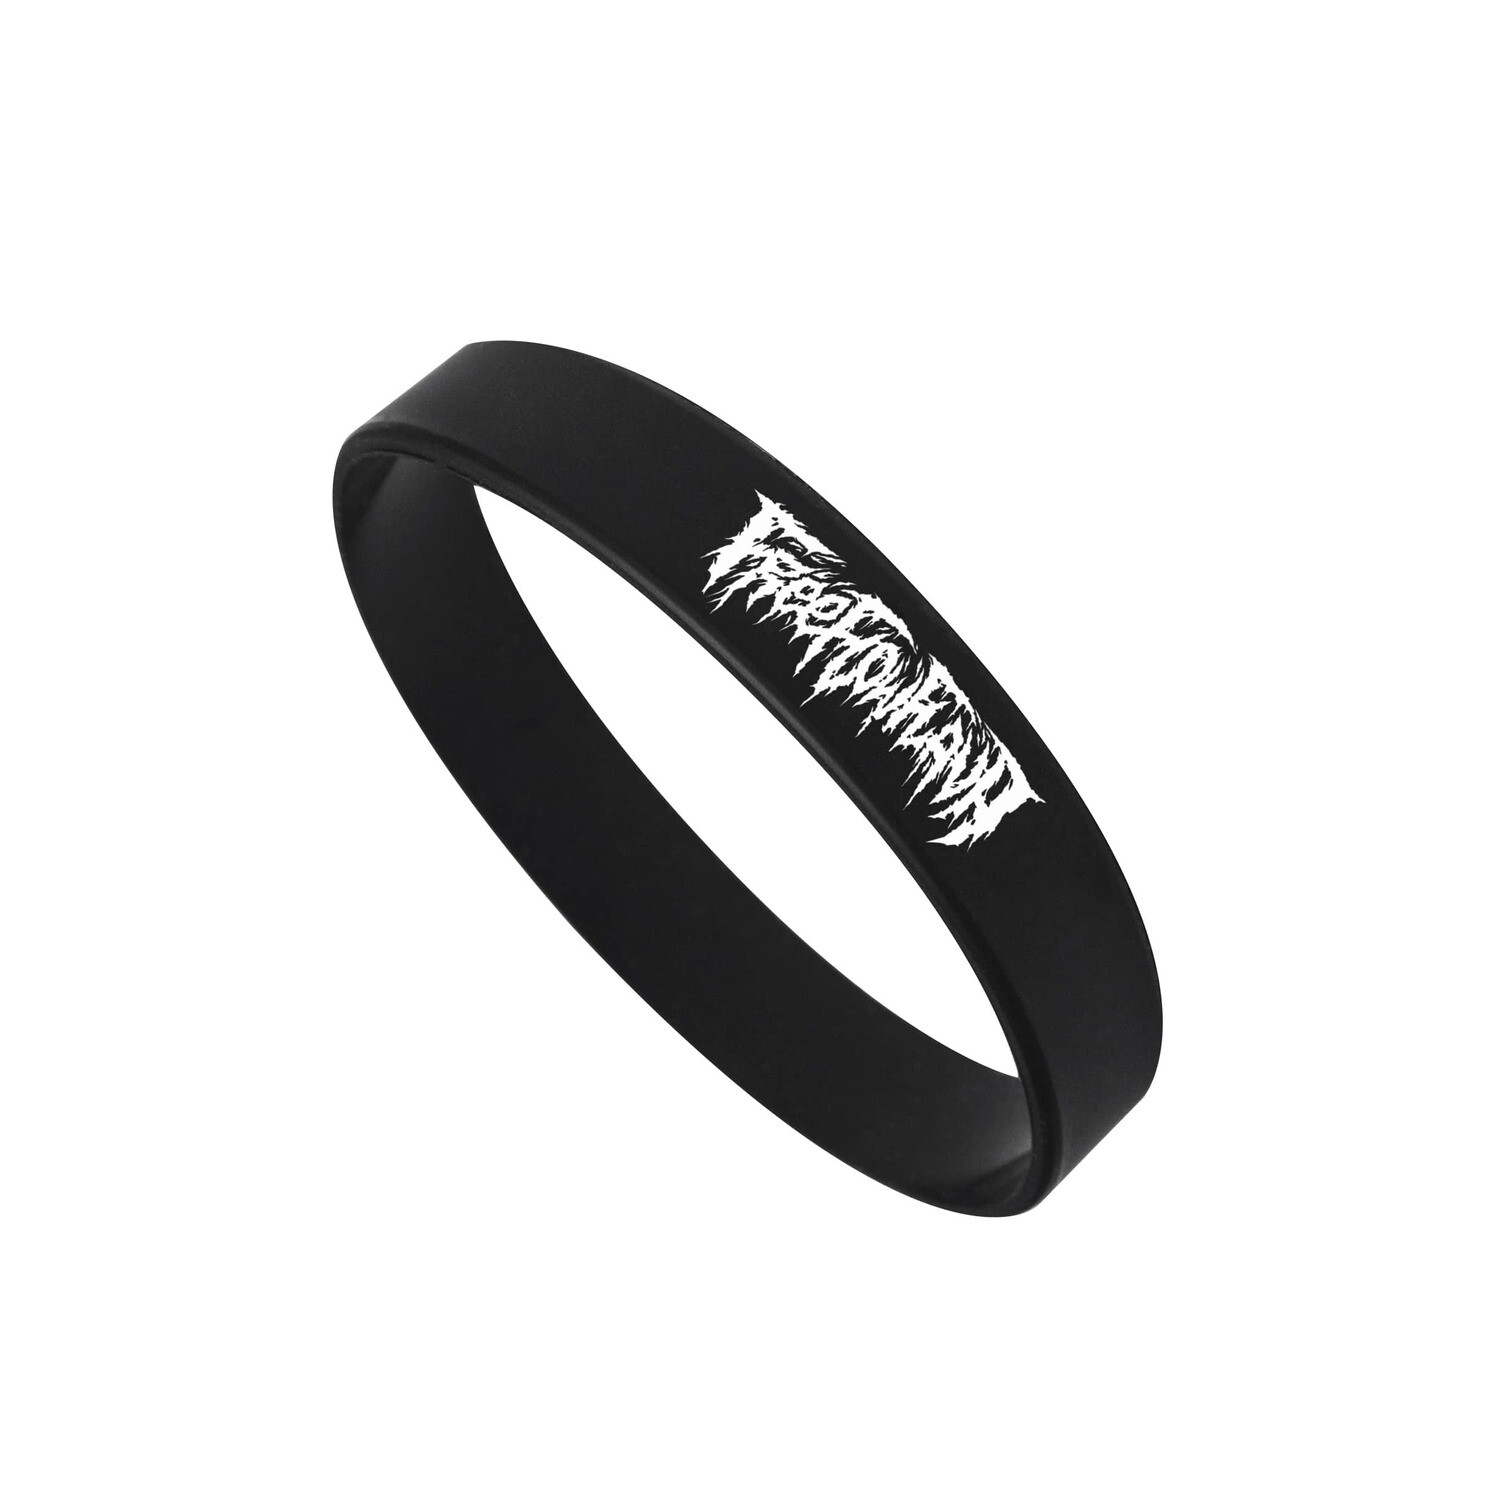 Wristband "Free Flow Flava"